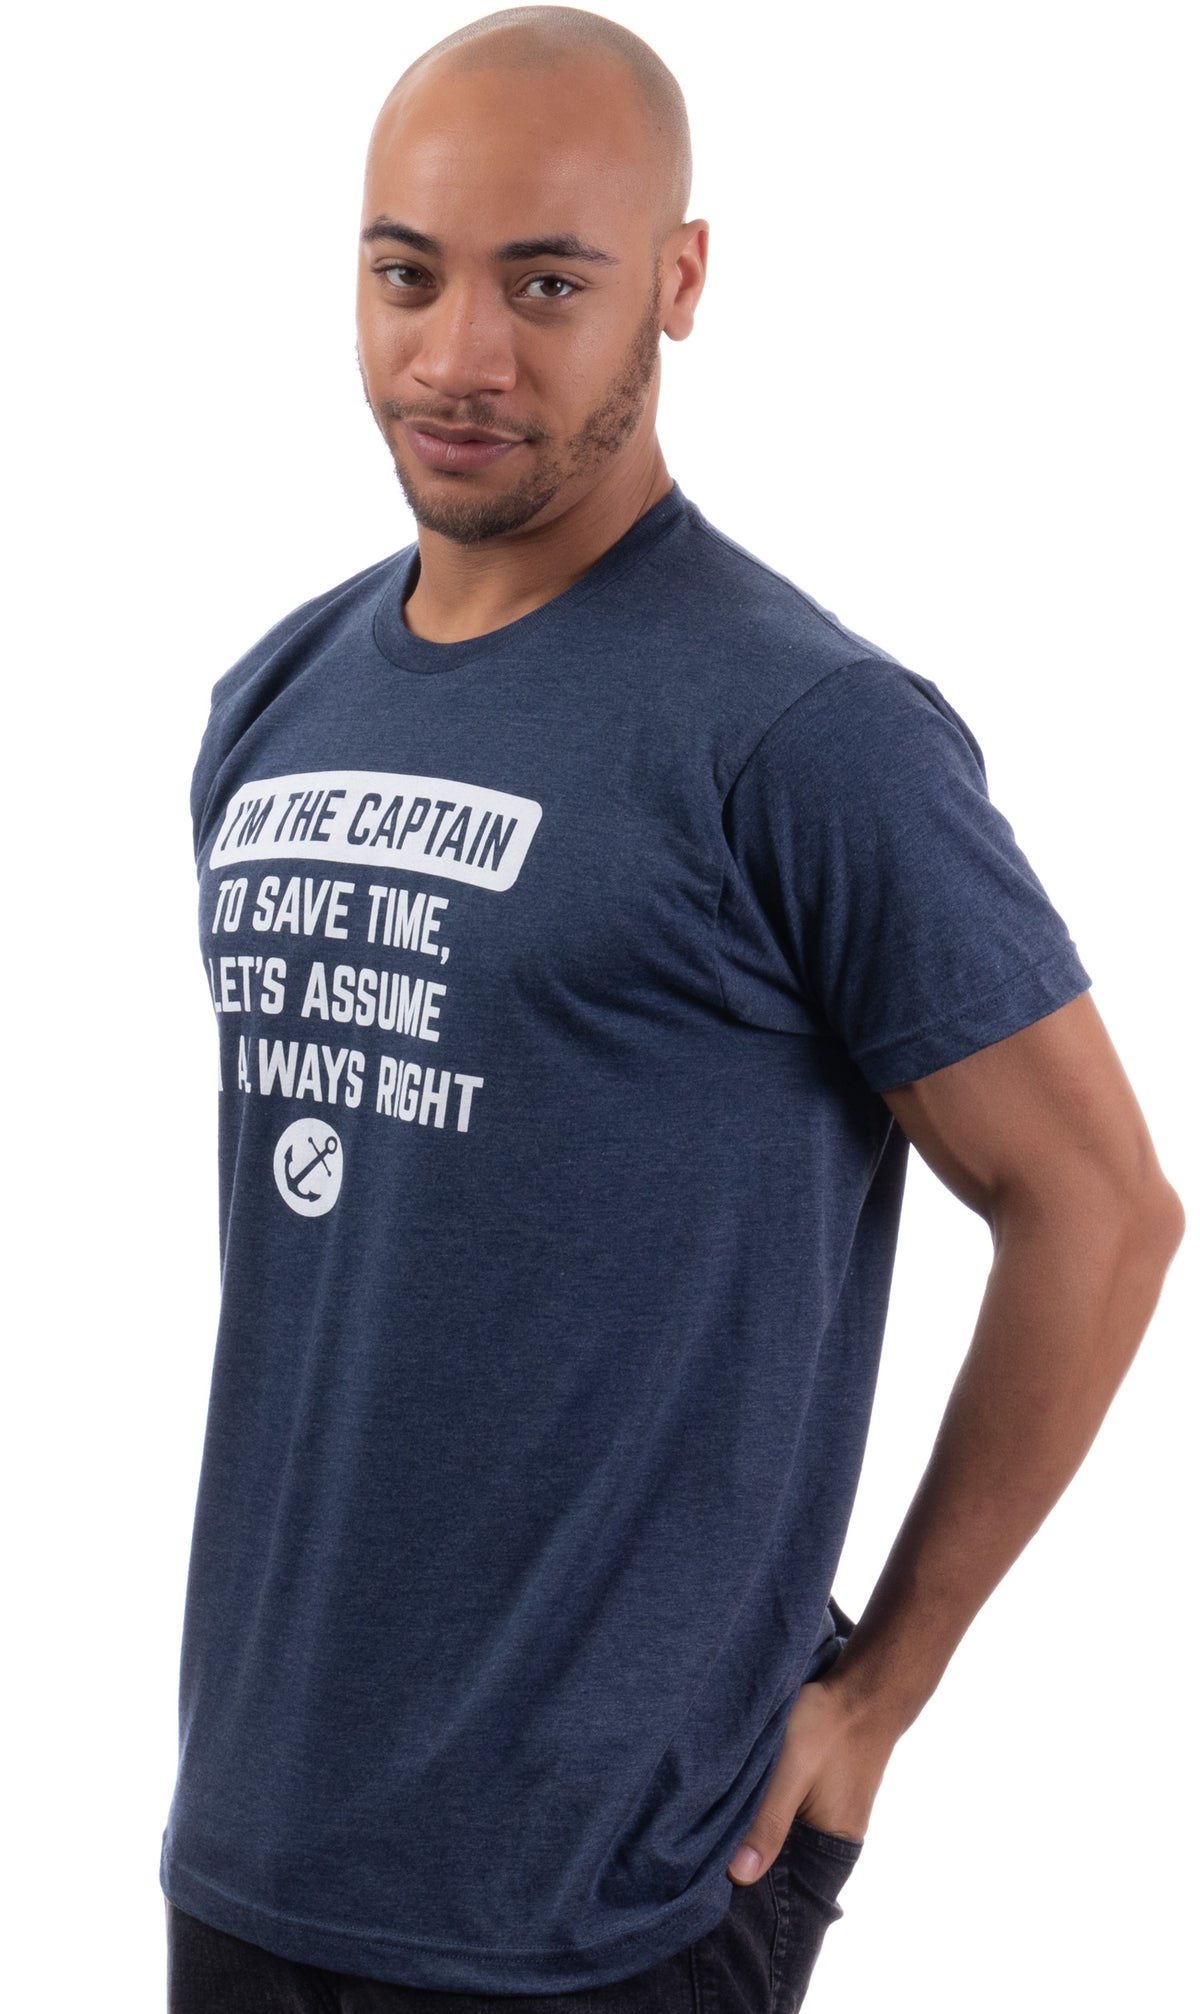 I'm the Captain, Assume I'm Right - Funny Boating Joke Boater Boat T-shirt